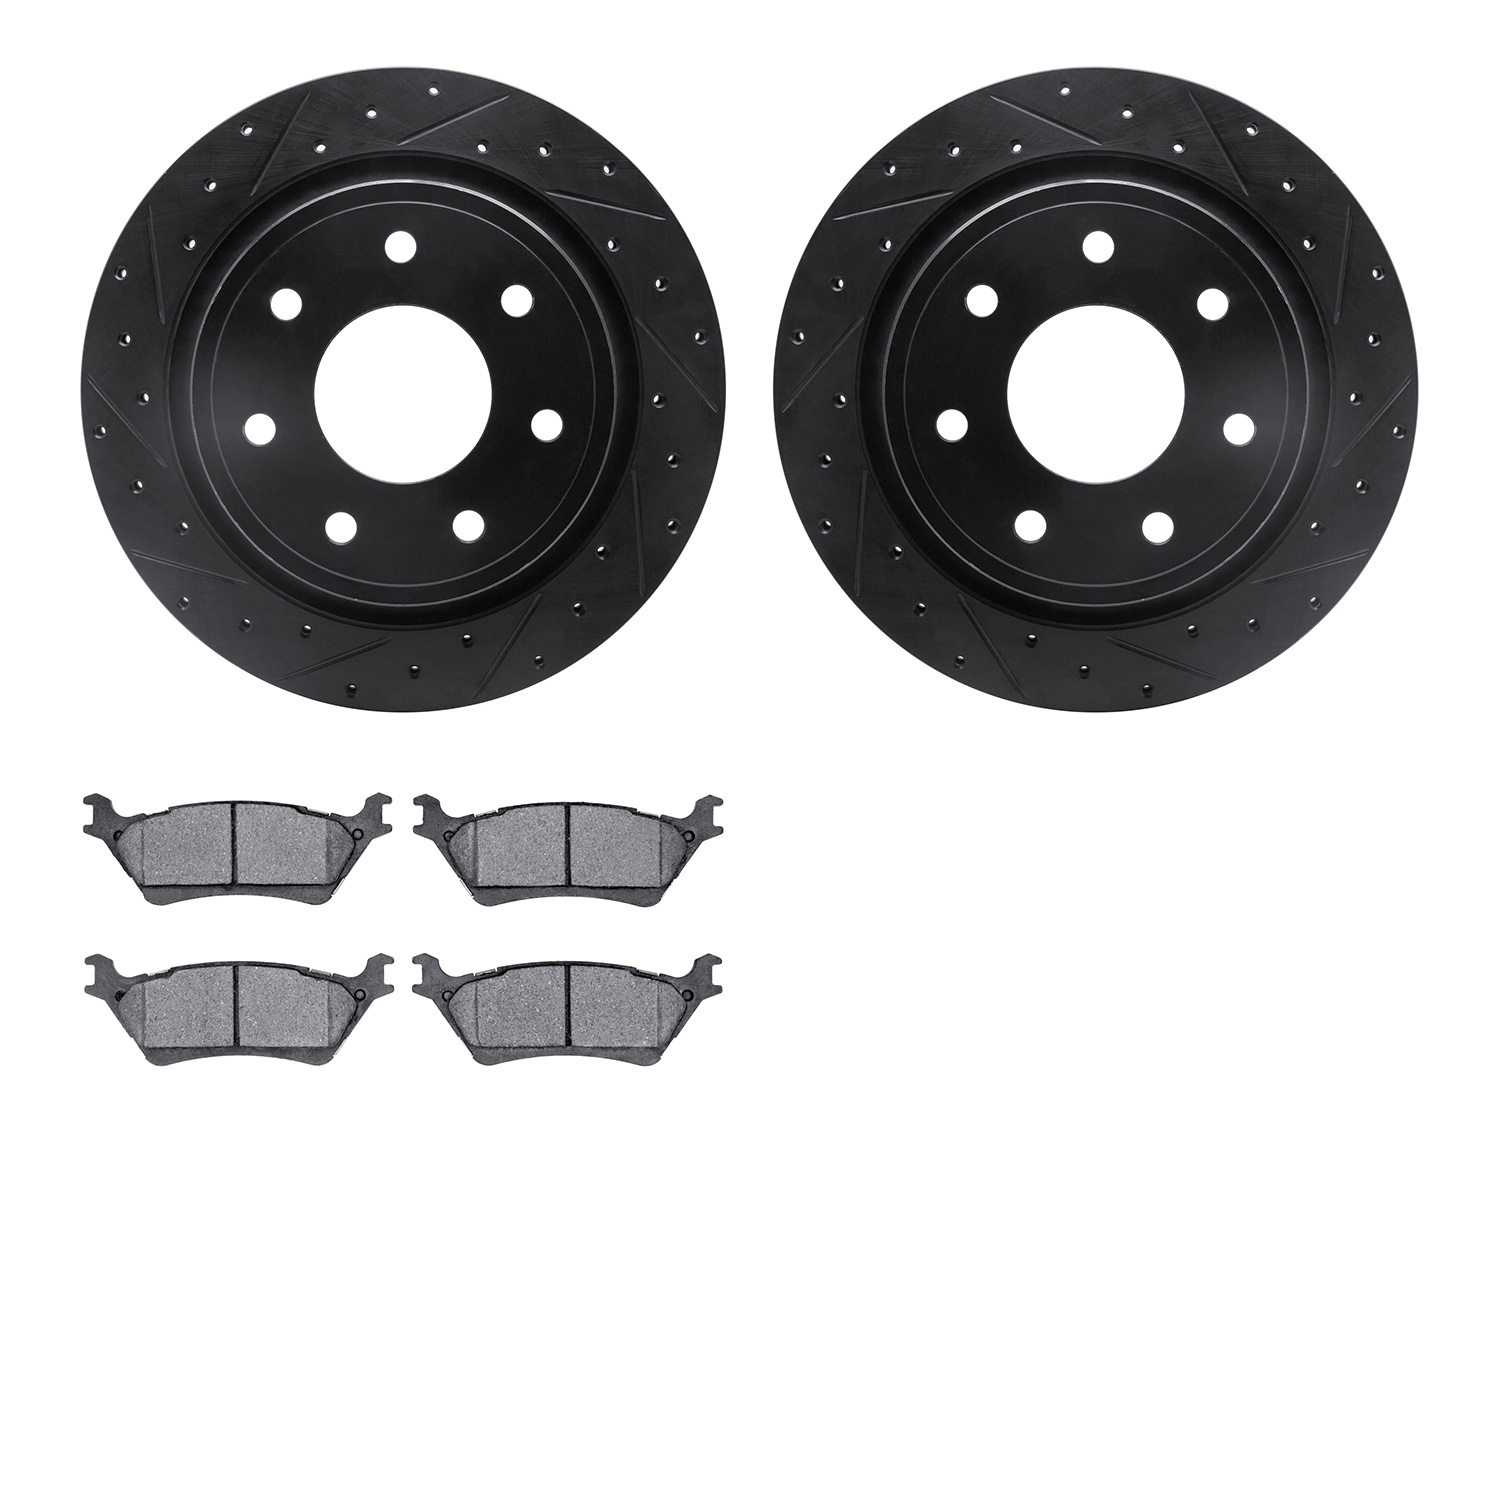 8302-54207 Drilled/Slotted Brake Rotors with 3000-Series Ceramic Brake Pads Kit [Black], 2012-2014 Ford/Lincoln/Mercury/Mazda, P